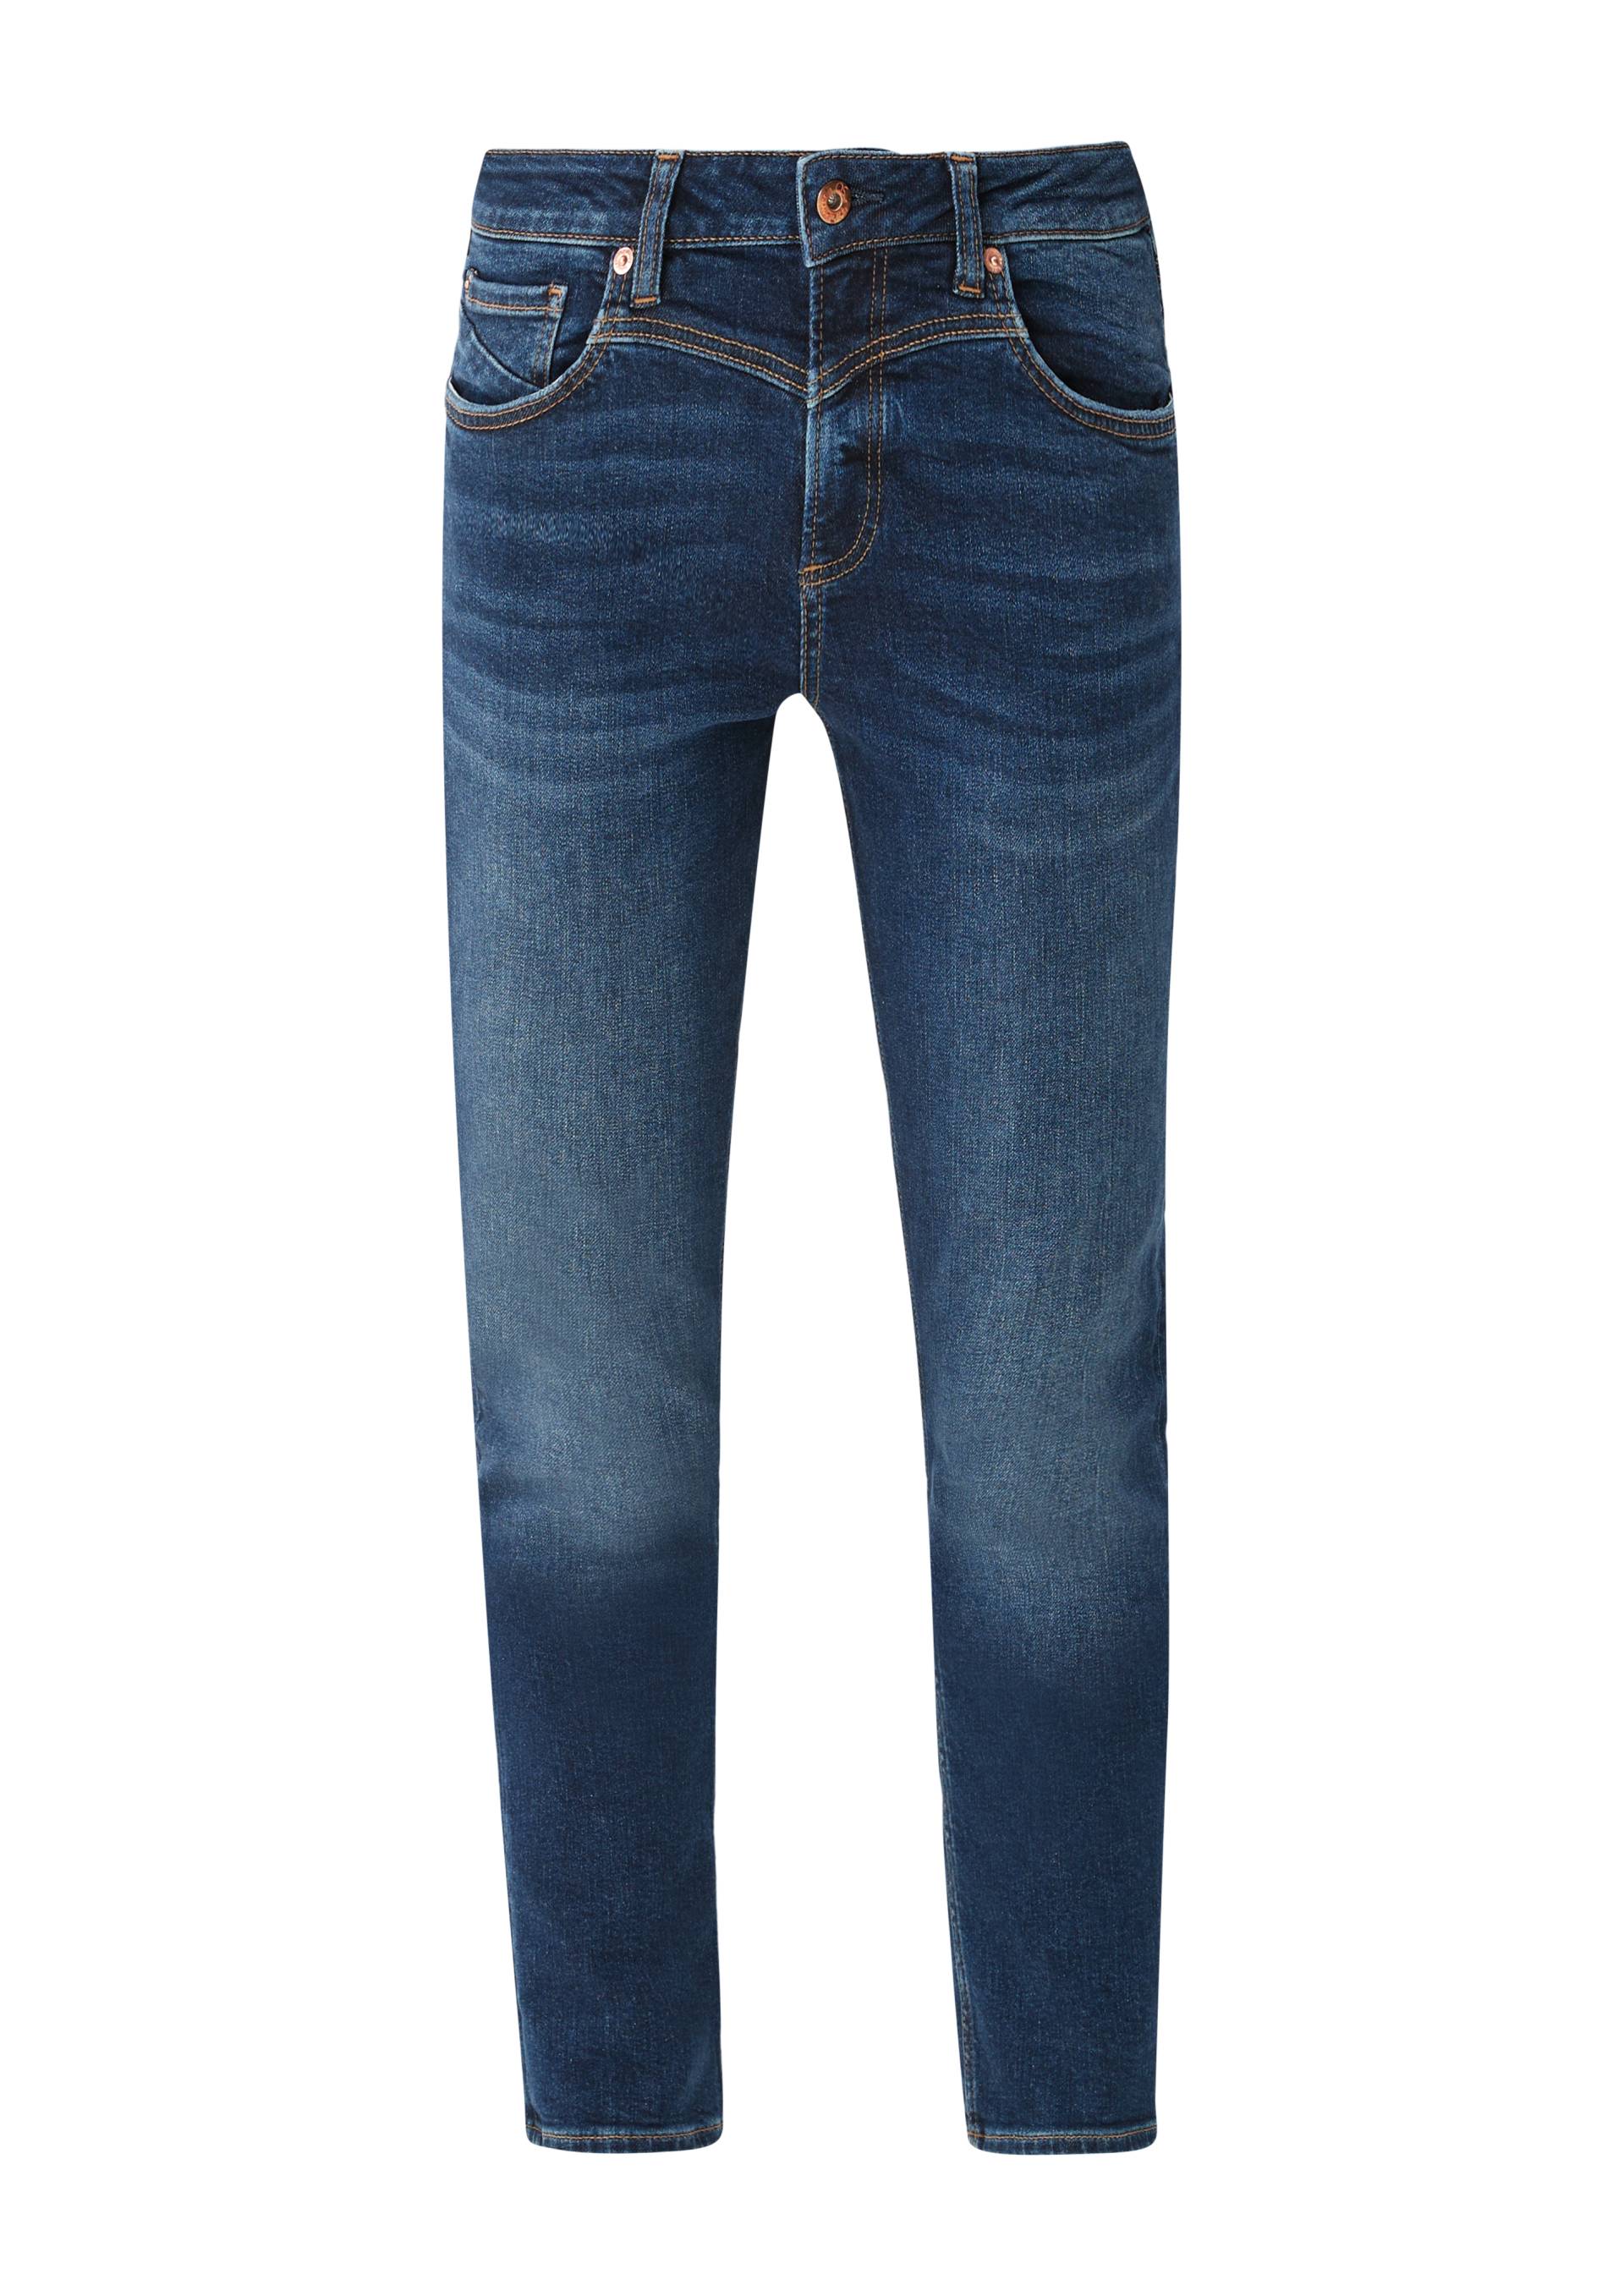 QS - Jeans Catie / Slim Fit / Mid Rise / Slim Leg, Damen, blau von QS